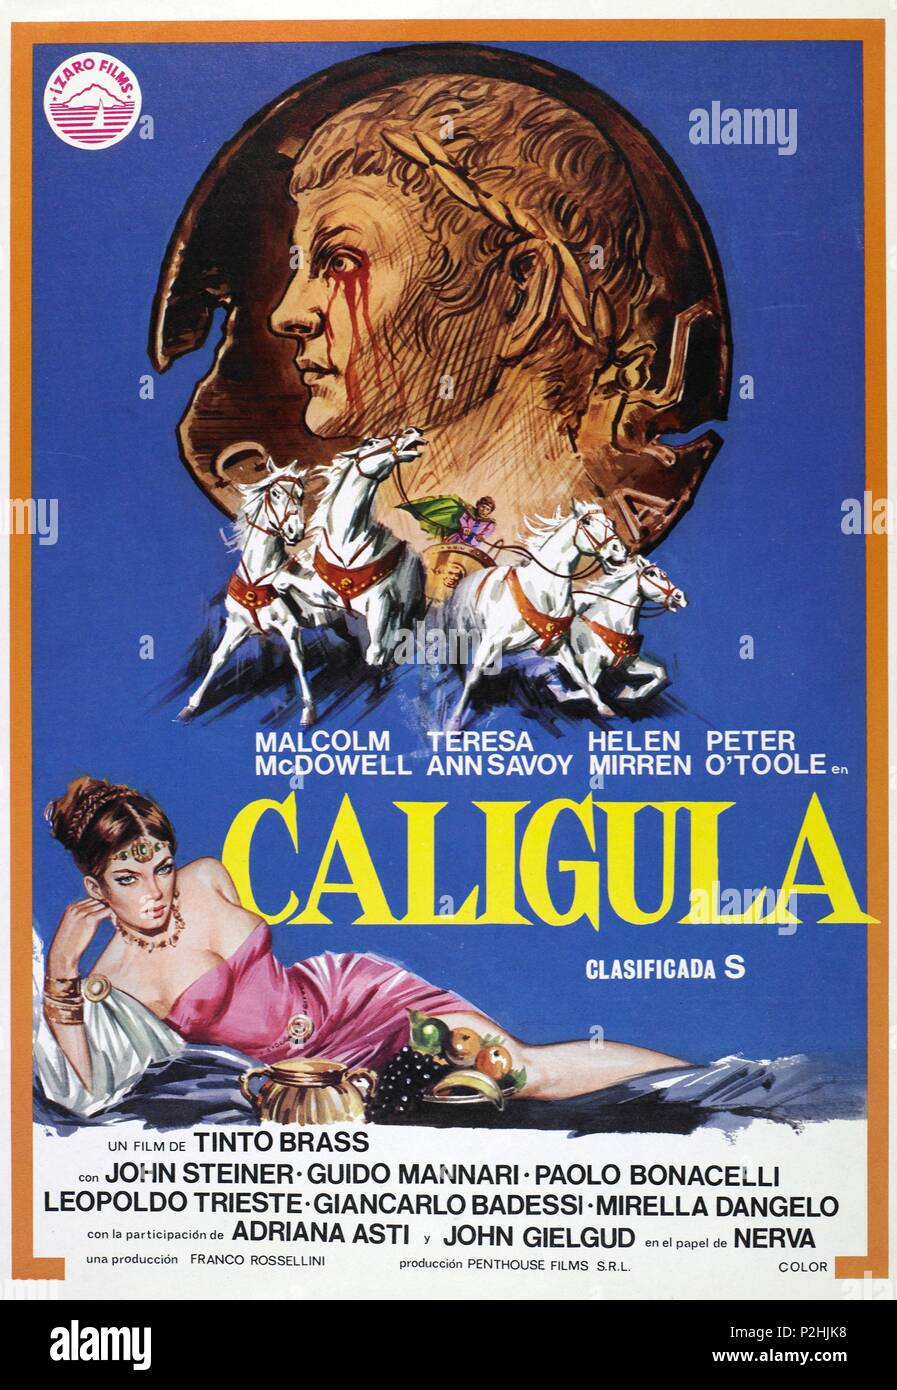 Tinto Brass Full Movie Original Film Title: CALIGOLA. English Title: CALIGULA. Film Director: TINTO  BRASS. Year: 1979. Credit: GTO/FELIX/PENTHOUSE / Album Stock Photo - Alamy